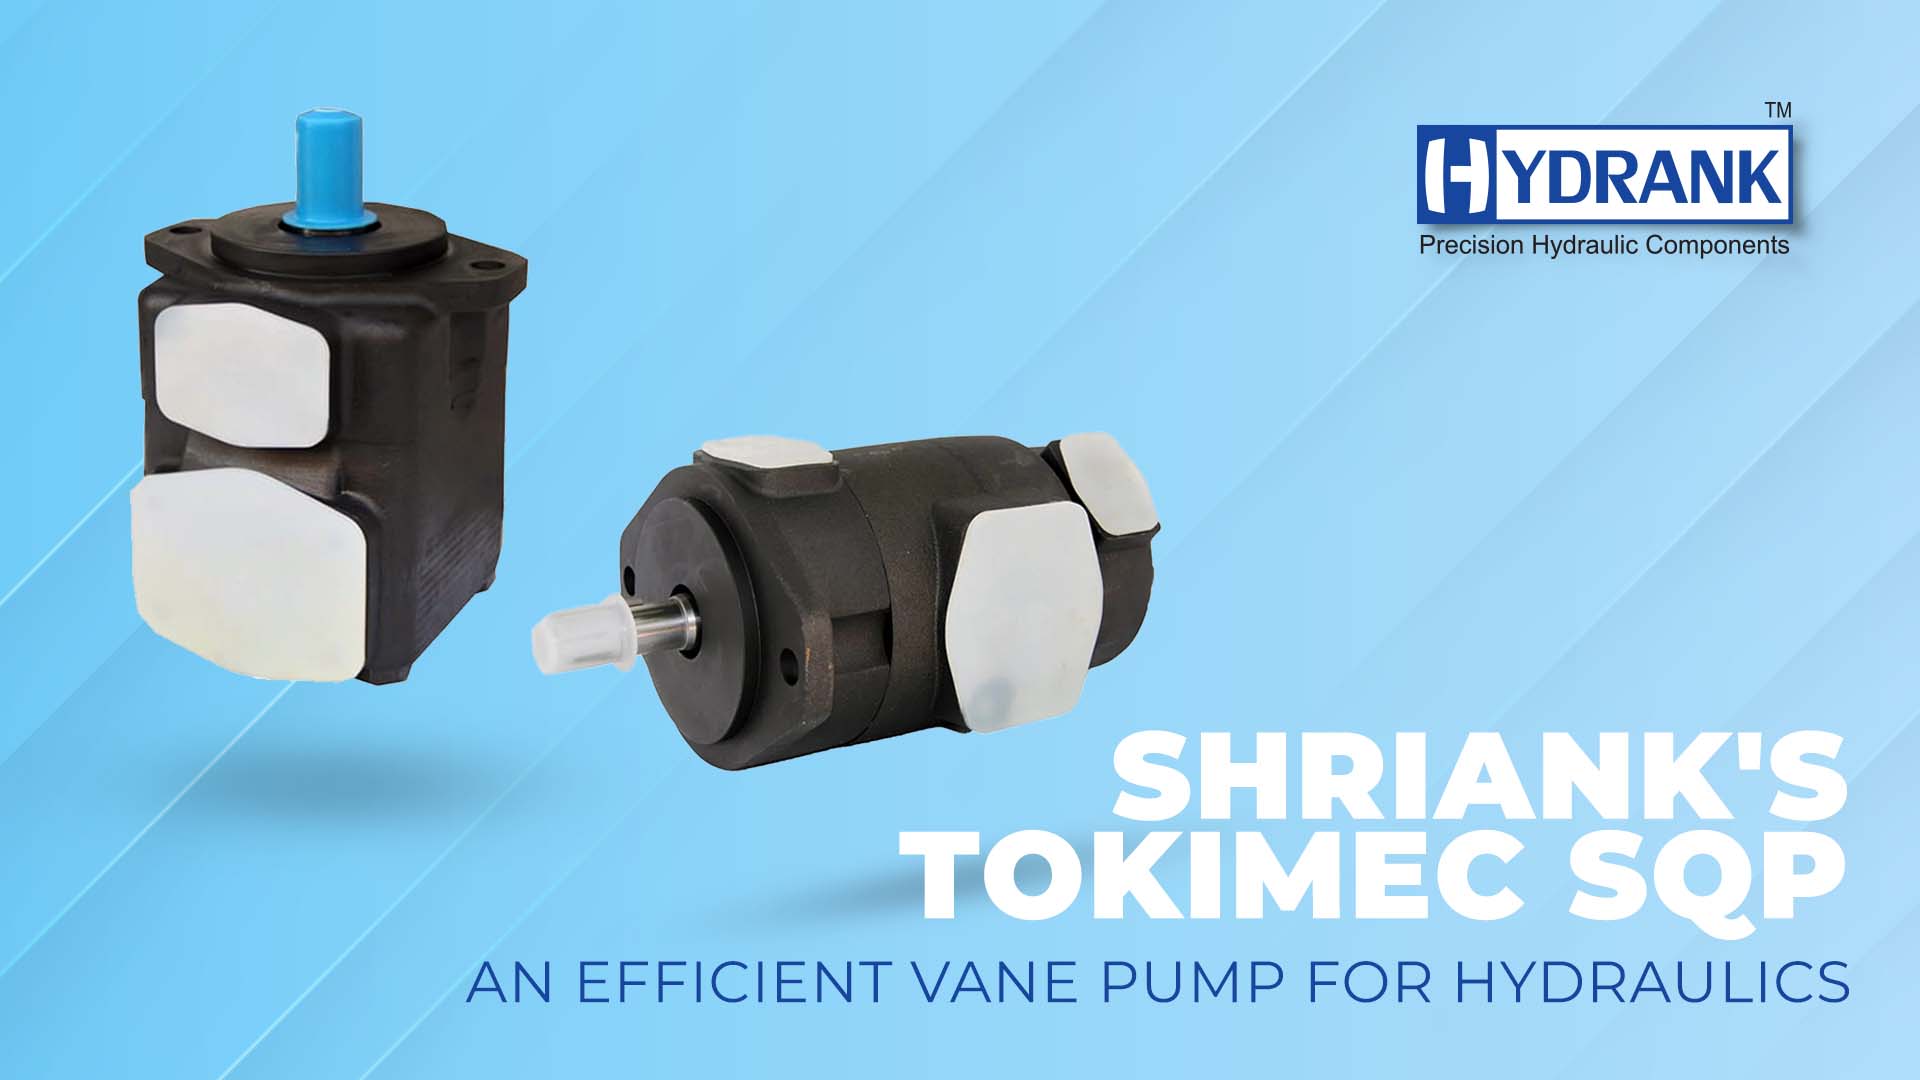 Shriank’s Tokimec SQP: An Efficient Vane Pump For Hydraulics